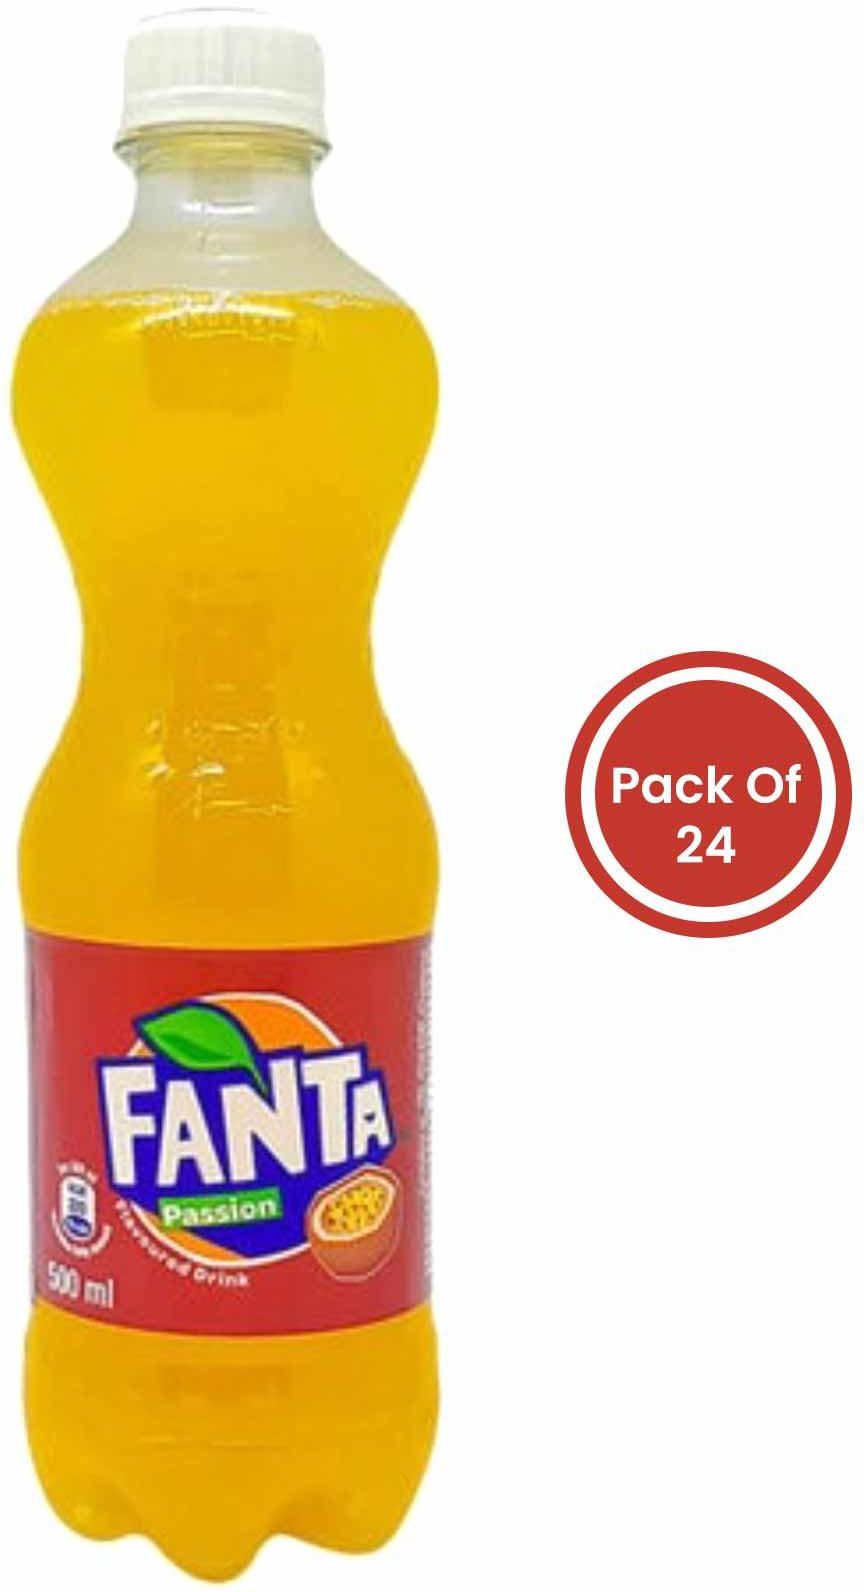 Fanta Passion Soda 500ml x Pack of 24